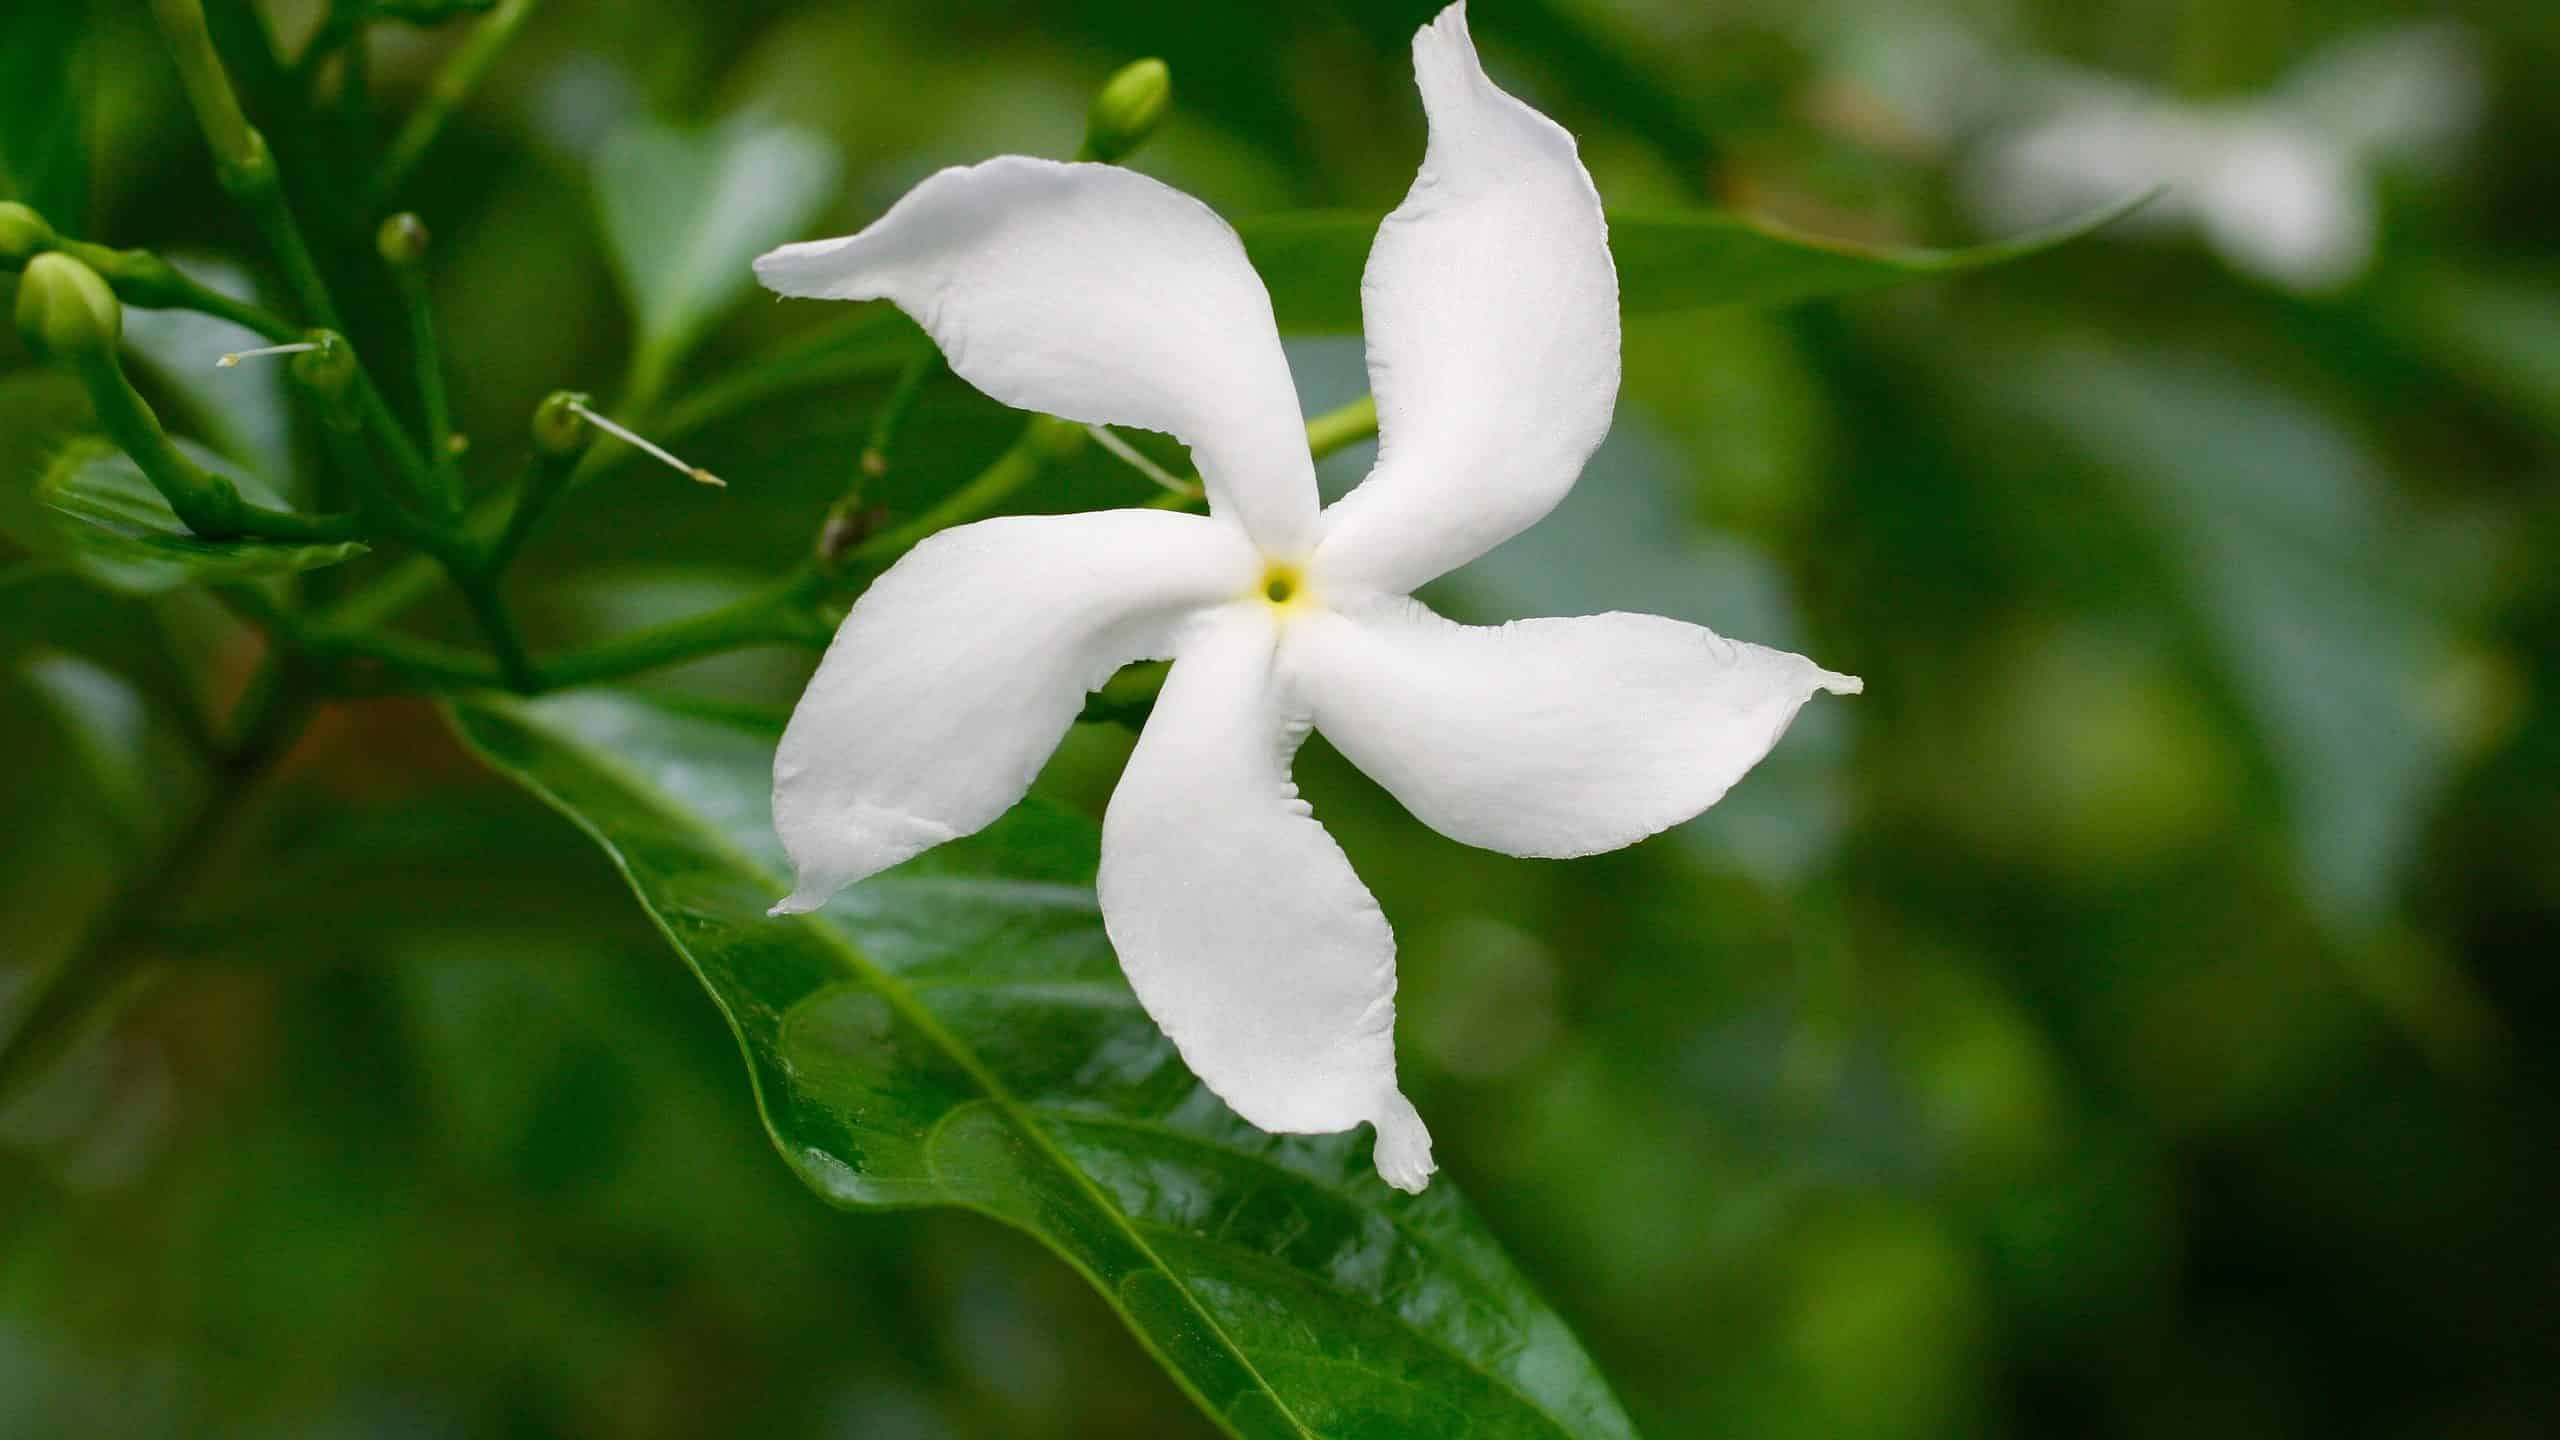 Star jasmine (Trachelospermum jasminoides)